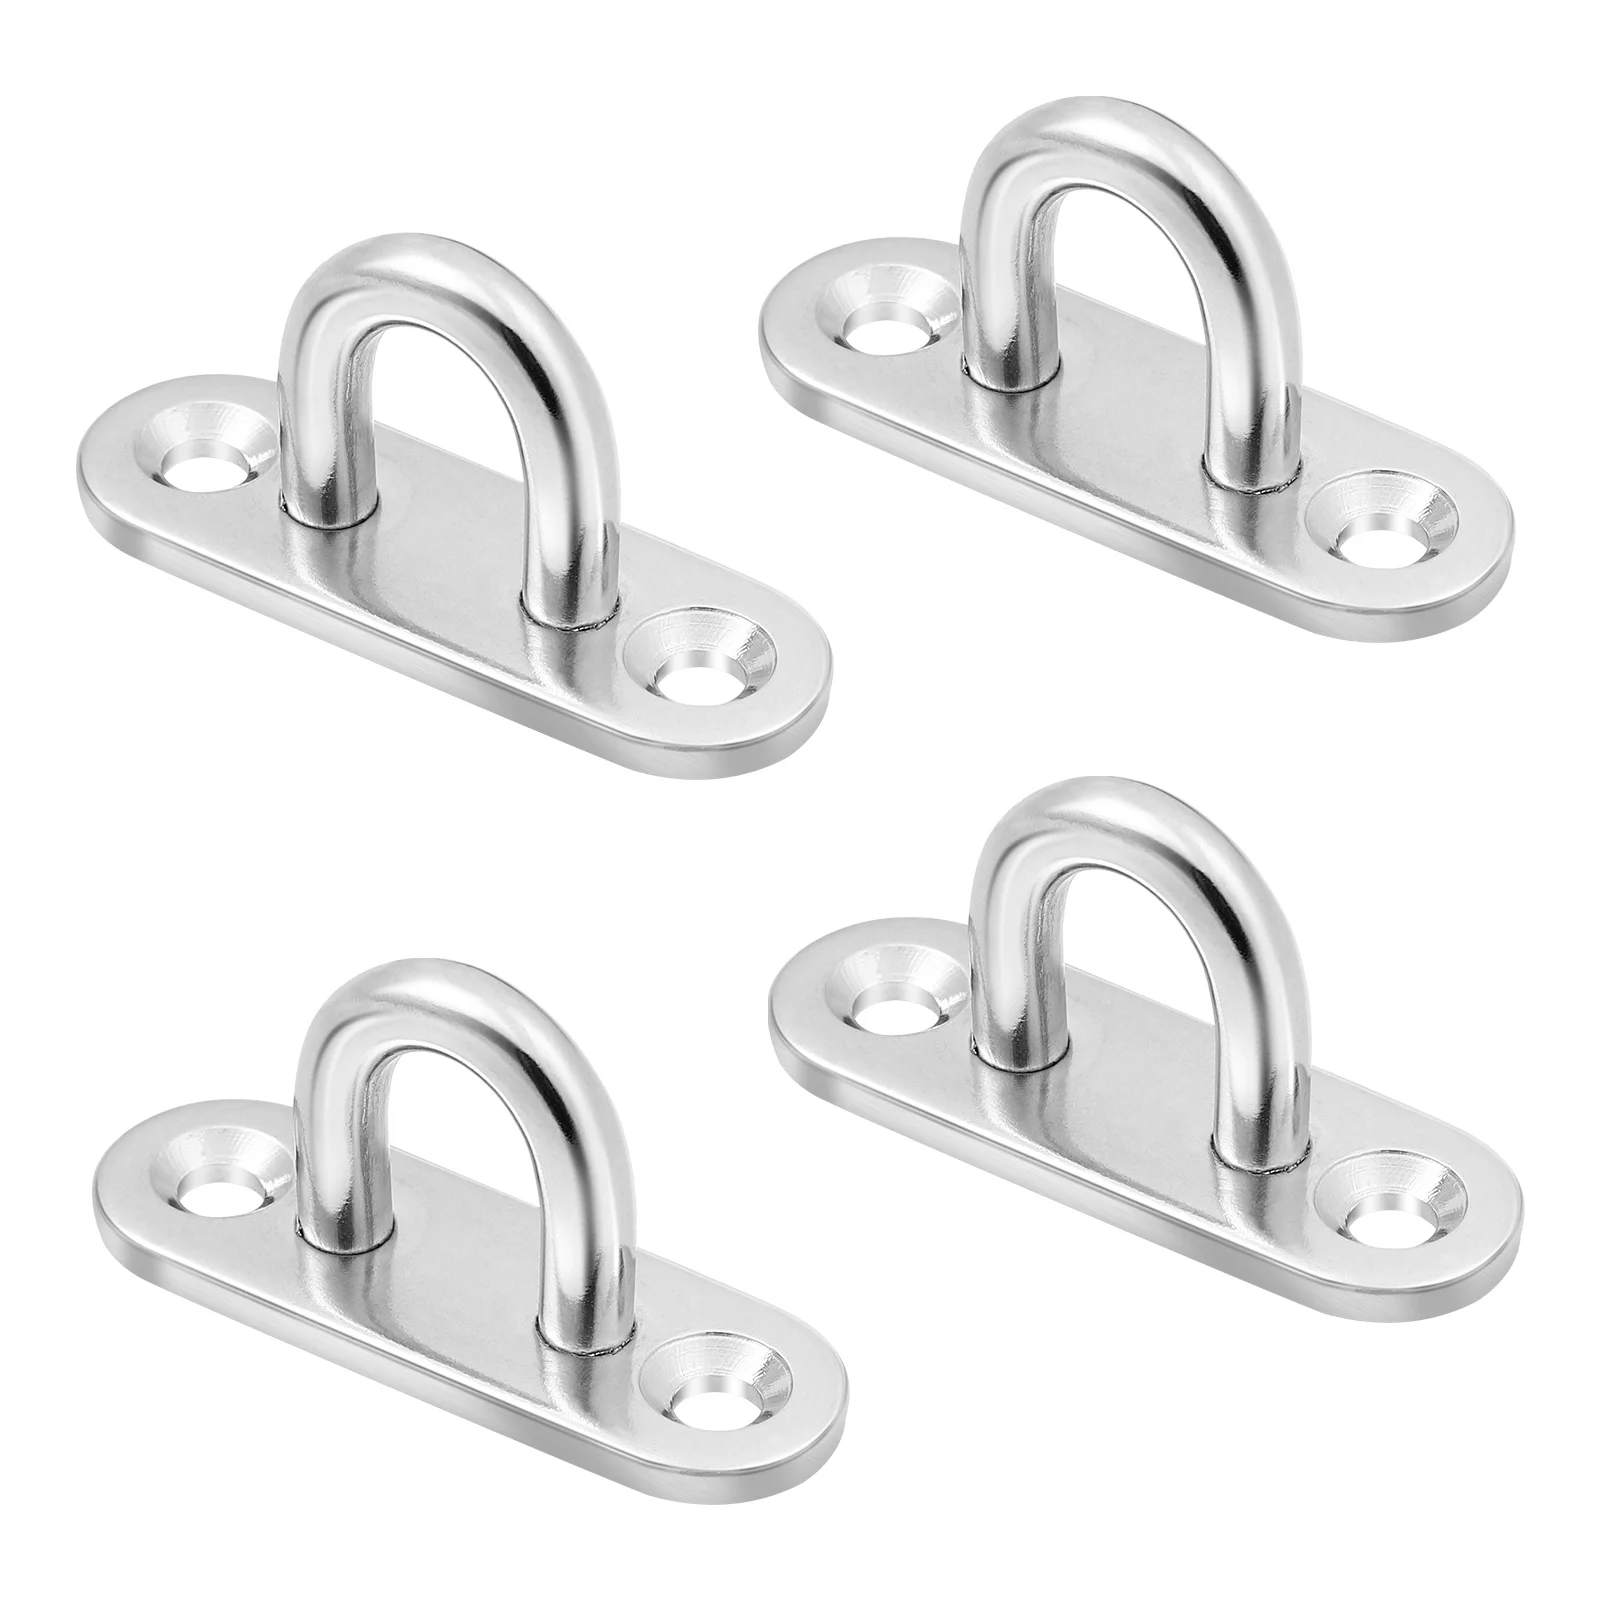 

Stainless Steel Oblong Pad Eye£¬ 4 Plate Staple Ring Hook Loop U- shaped Design Screws Mount Hook Hanger£¬ Hooks for hanging